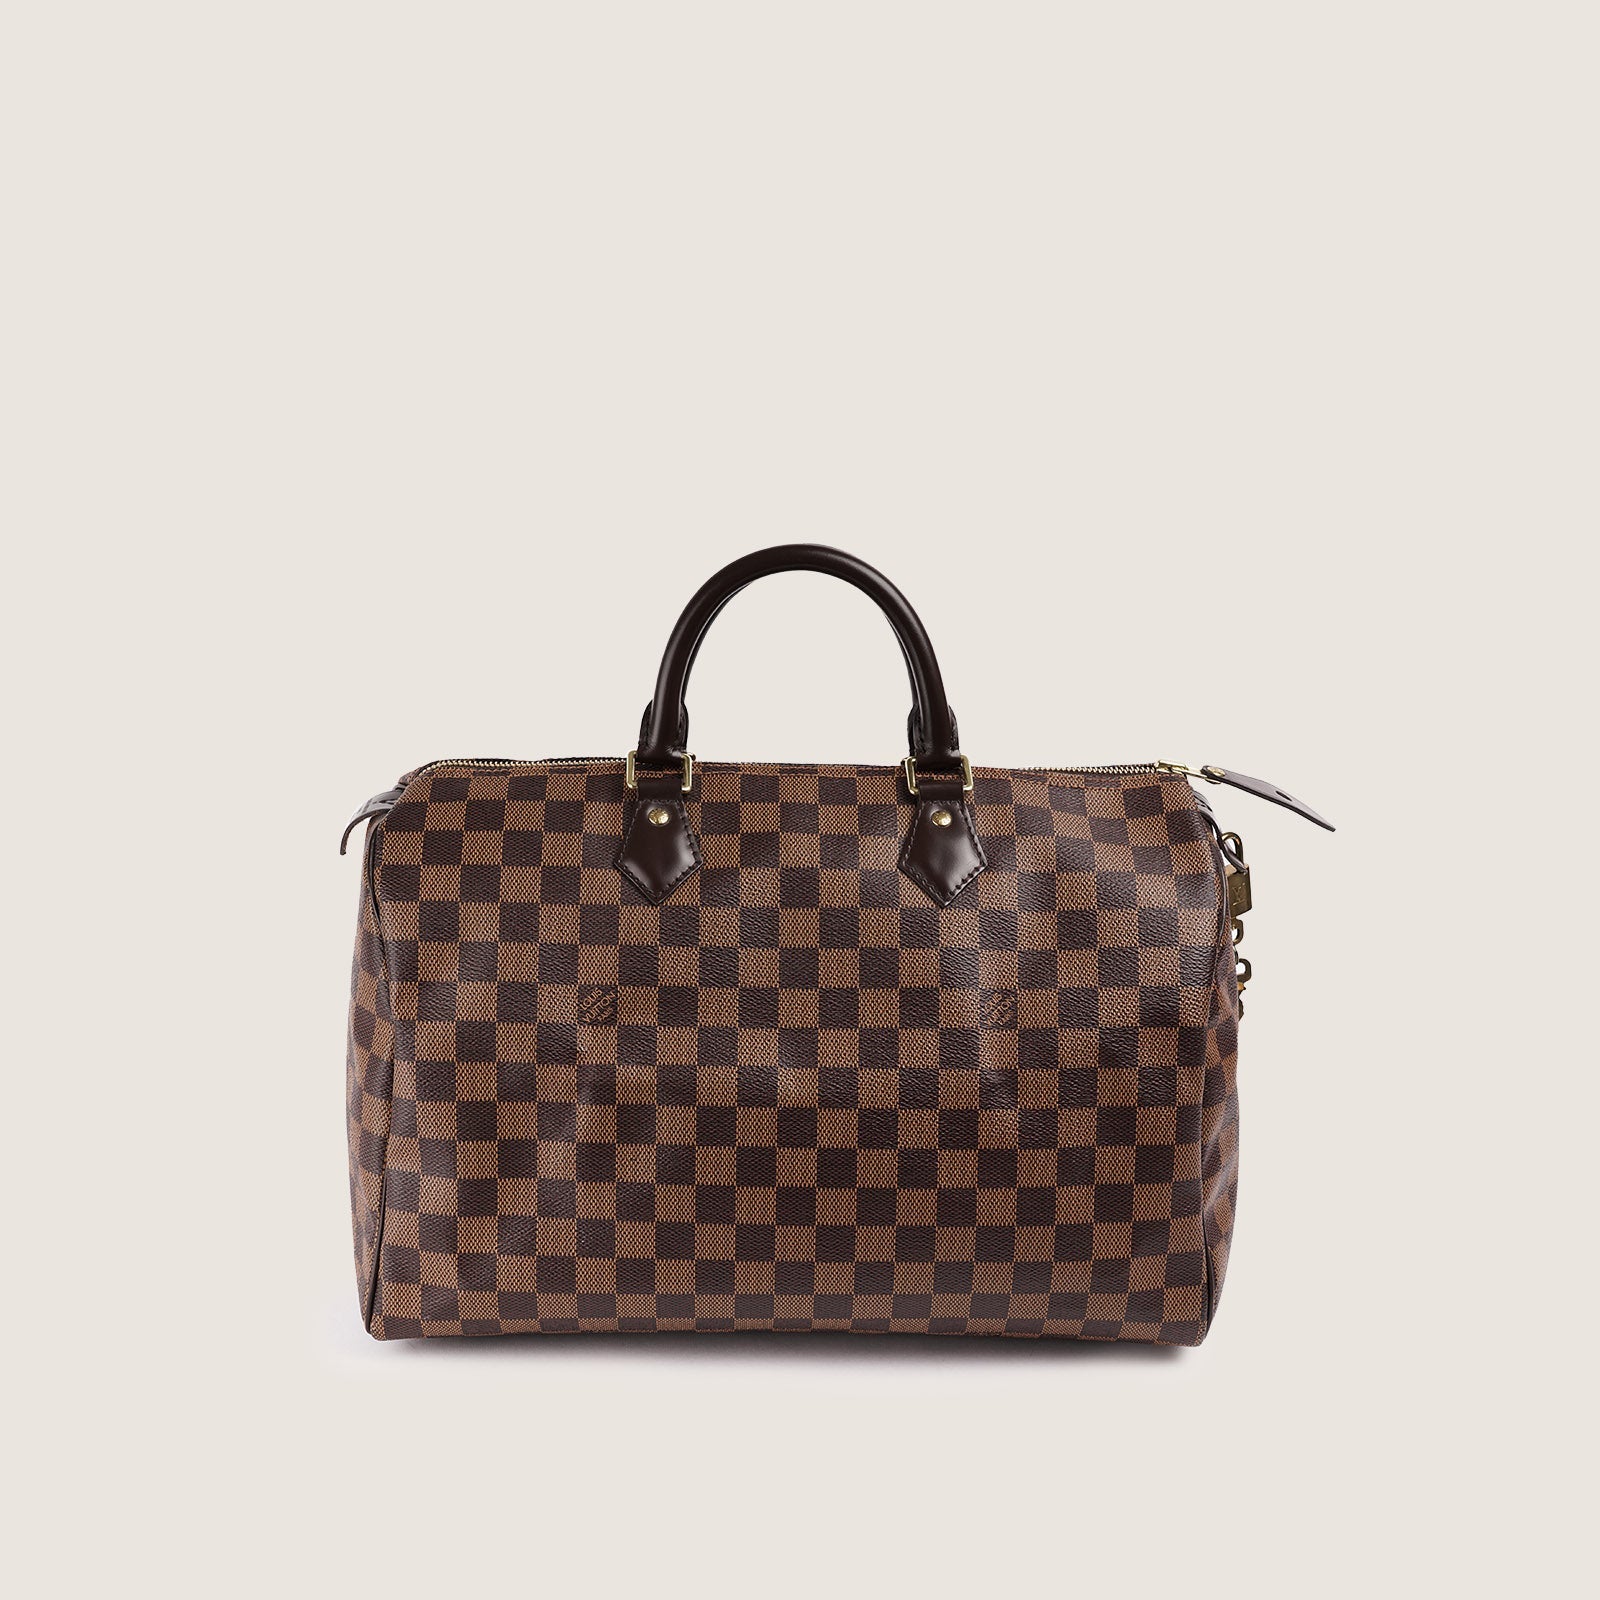 Speedy 35 Handbag - LOUIS VUITTON - Affordable Luxury